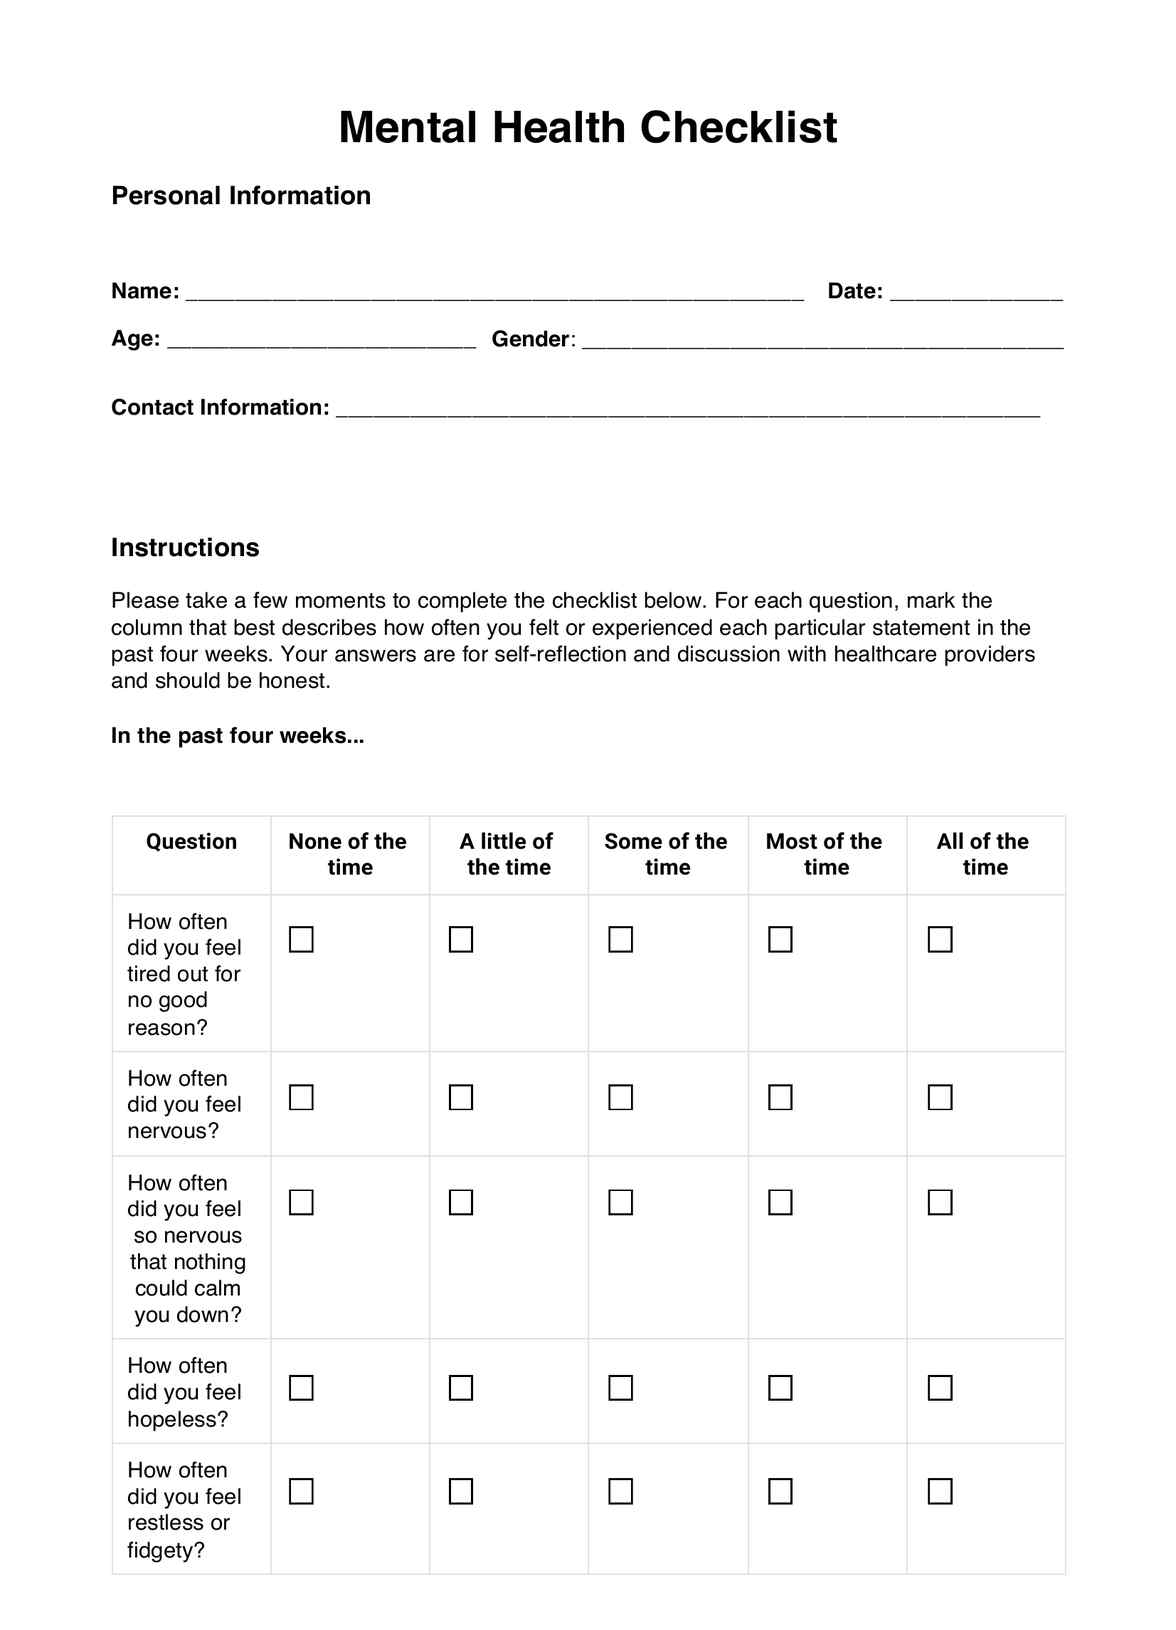 Mental Health Checklist PDF Example